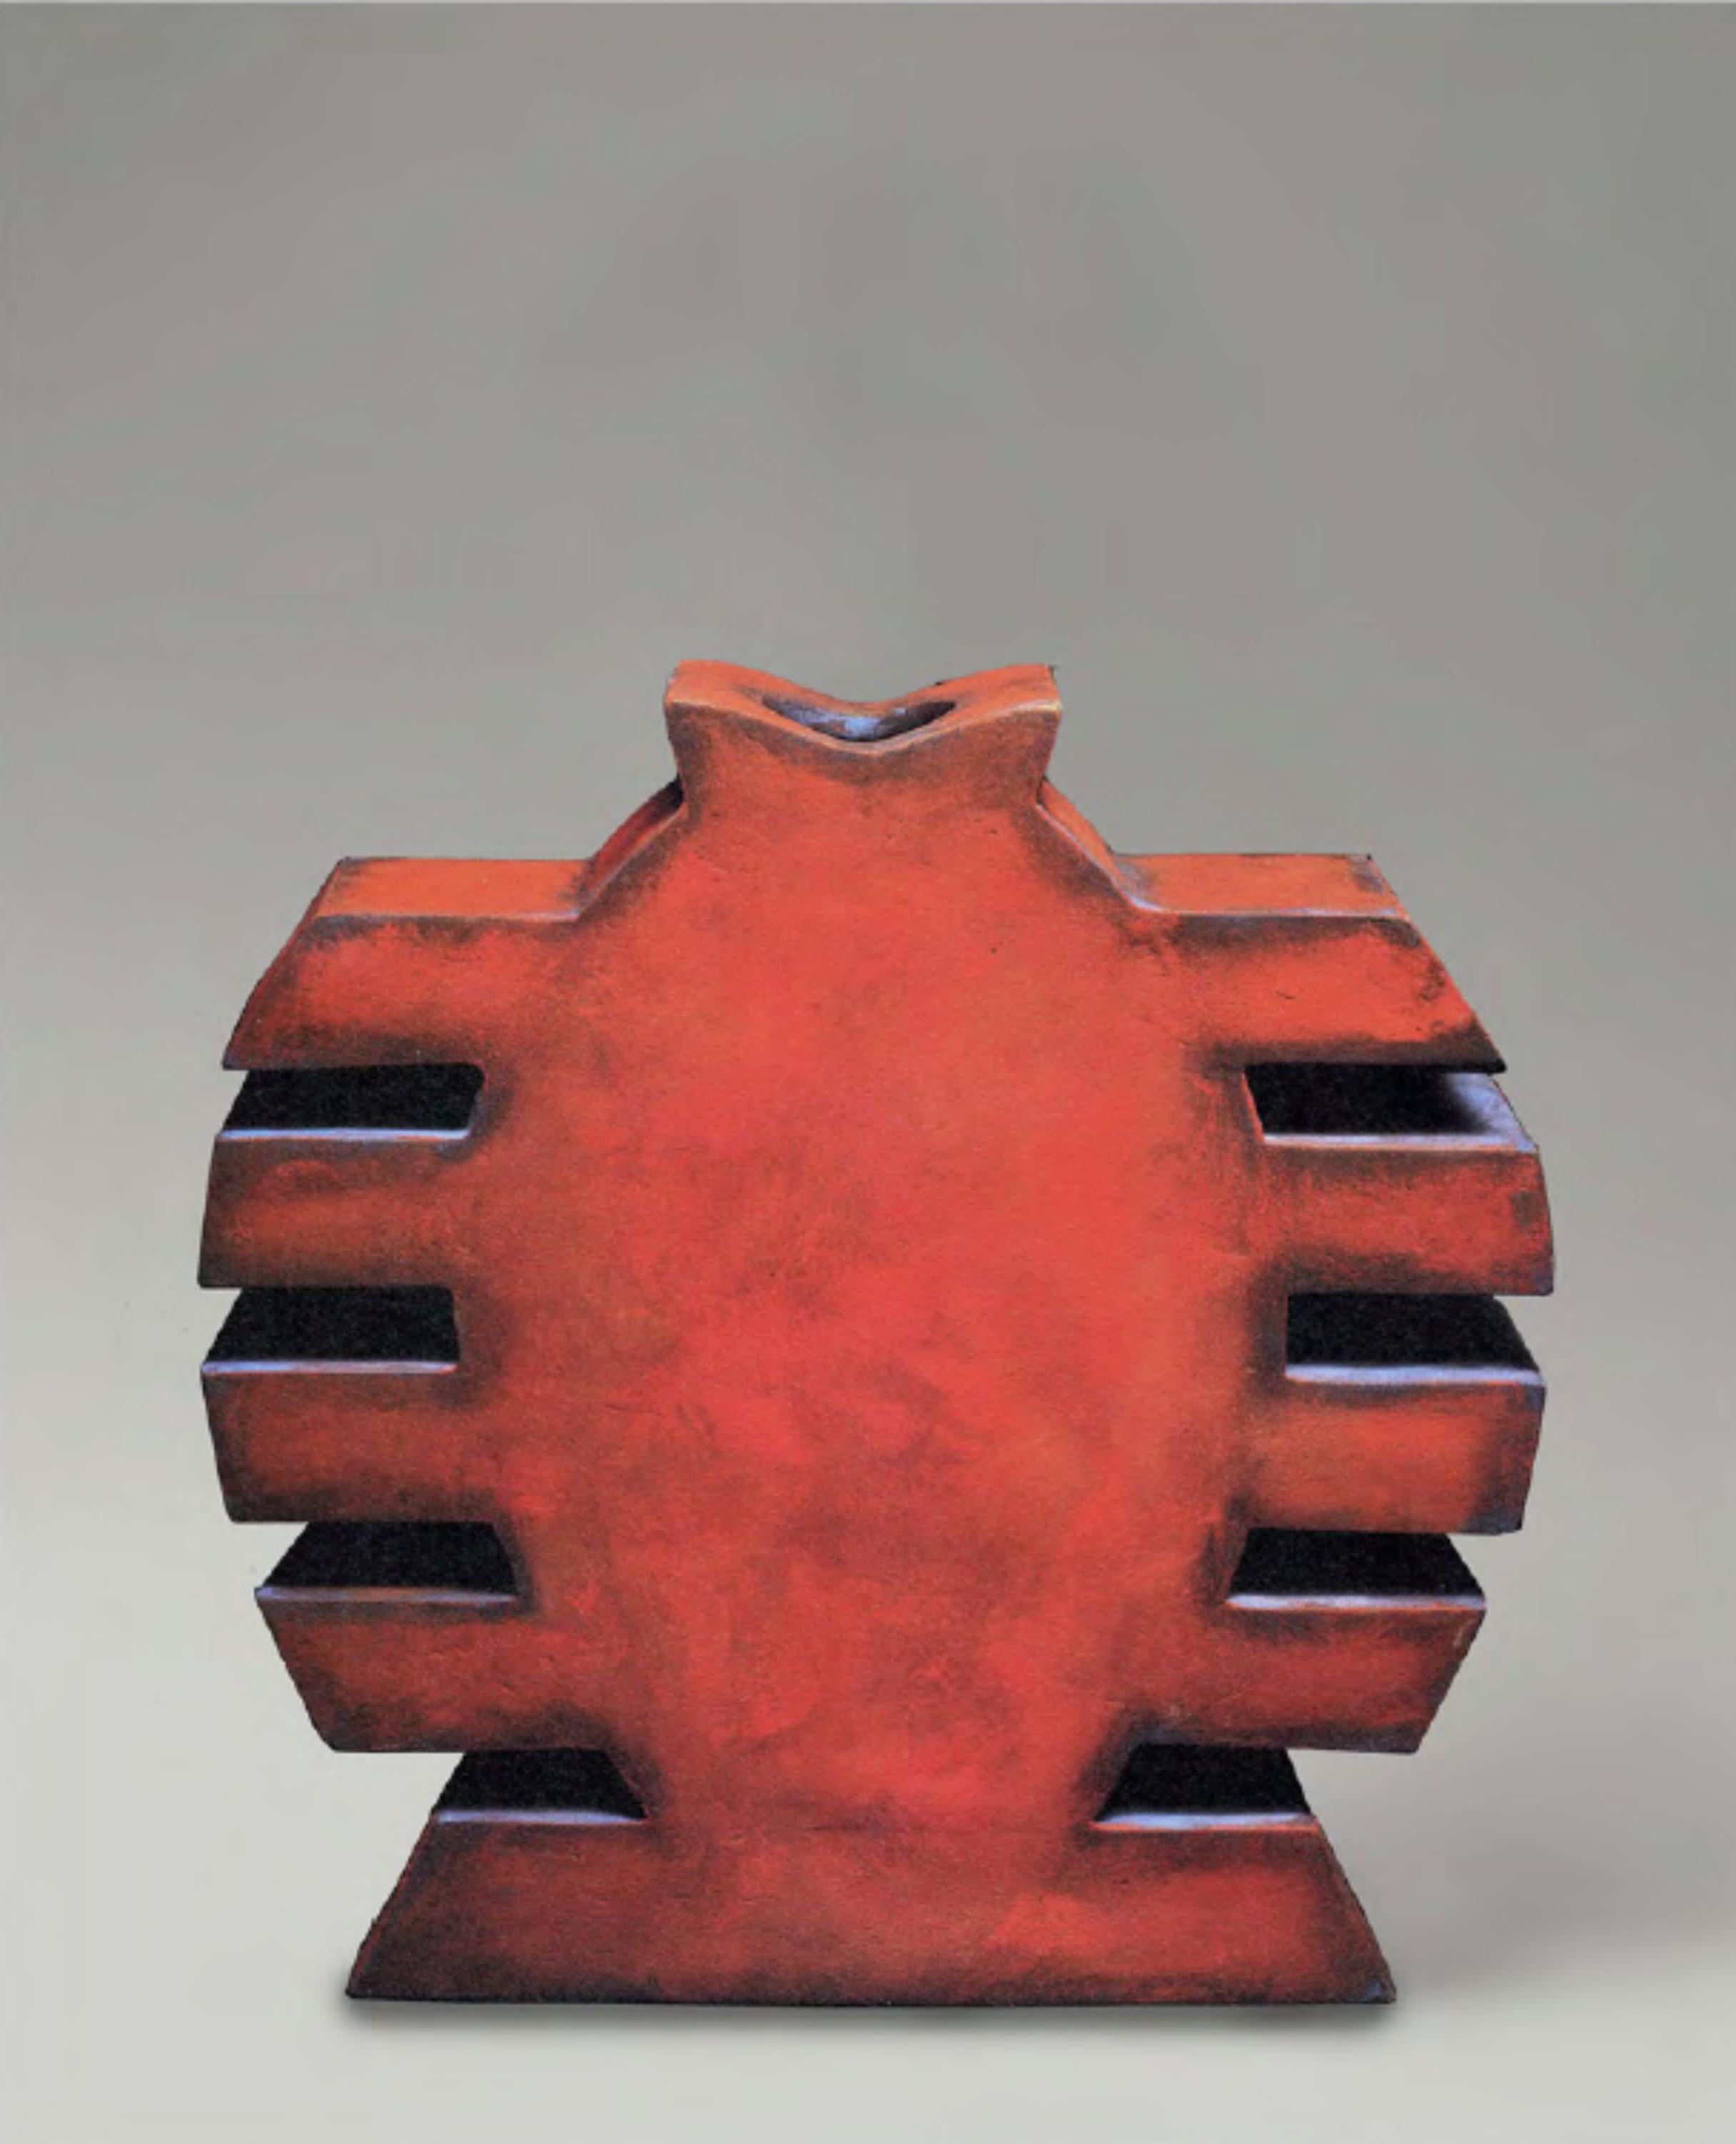 CF Te16 Terre by Caturegli Formica
Dimensions: W 45 x H 36 cm
Materials: Ceramic

Terres, Dakar, Senegal, 1987-1991 

TERRES is a series of symbolic ceramics sculpures produced in Dakar, Senegal, in the atelier 